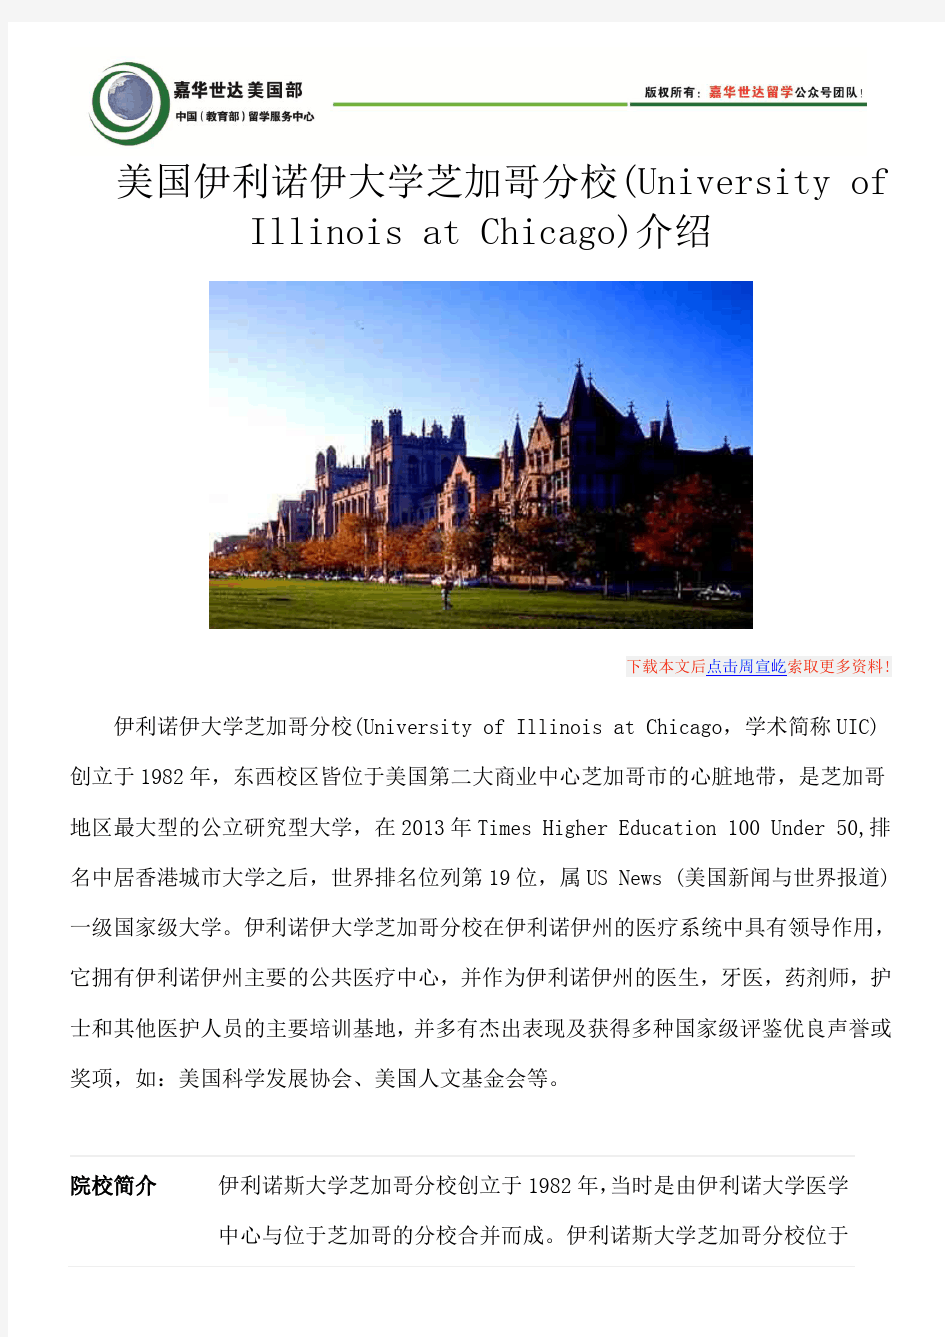 美国伊利诺伊大学芝加哥分校(University of Illinois at Chicago)介绍